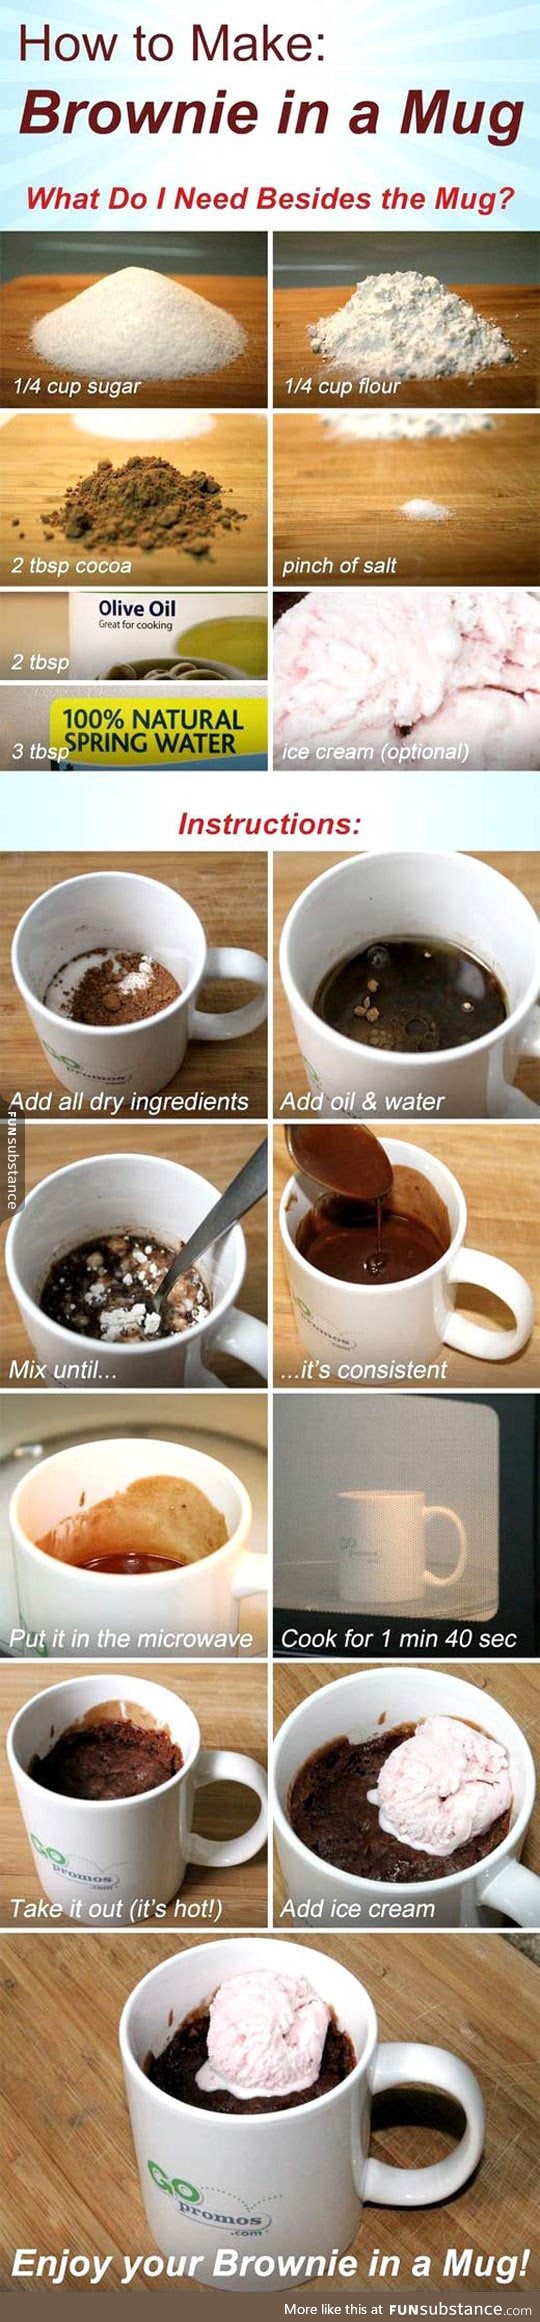 How to make a brownie in a mug